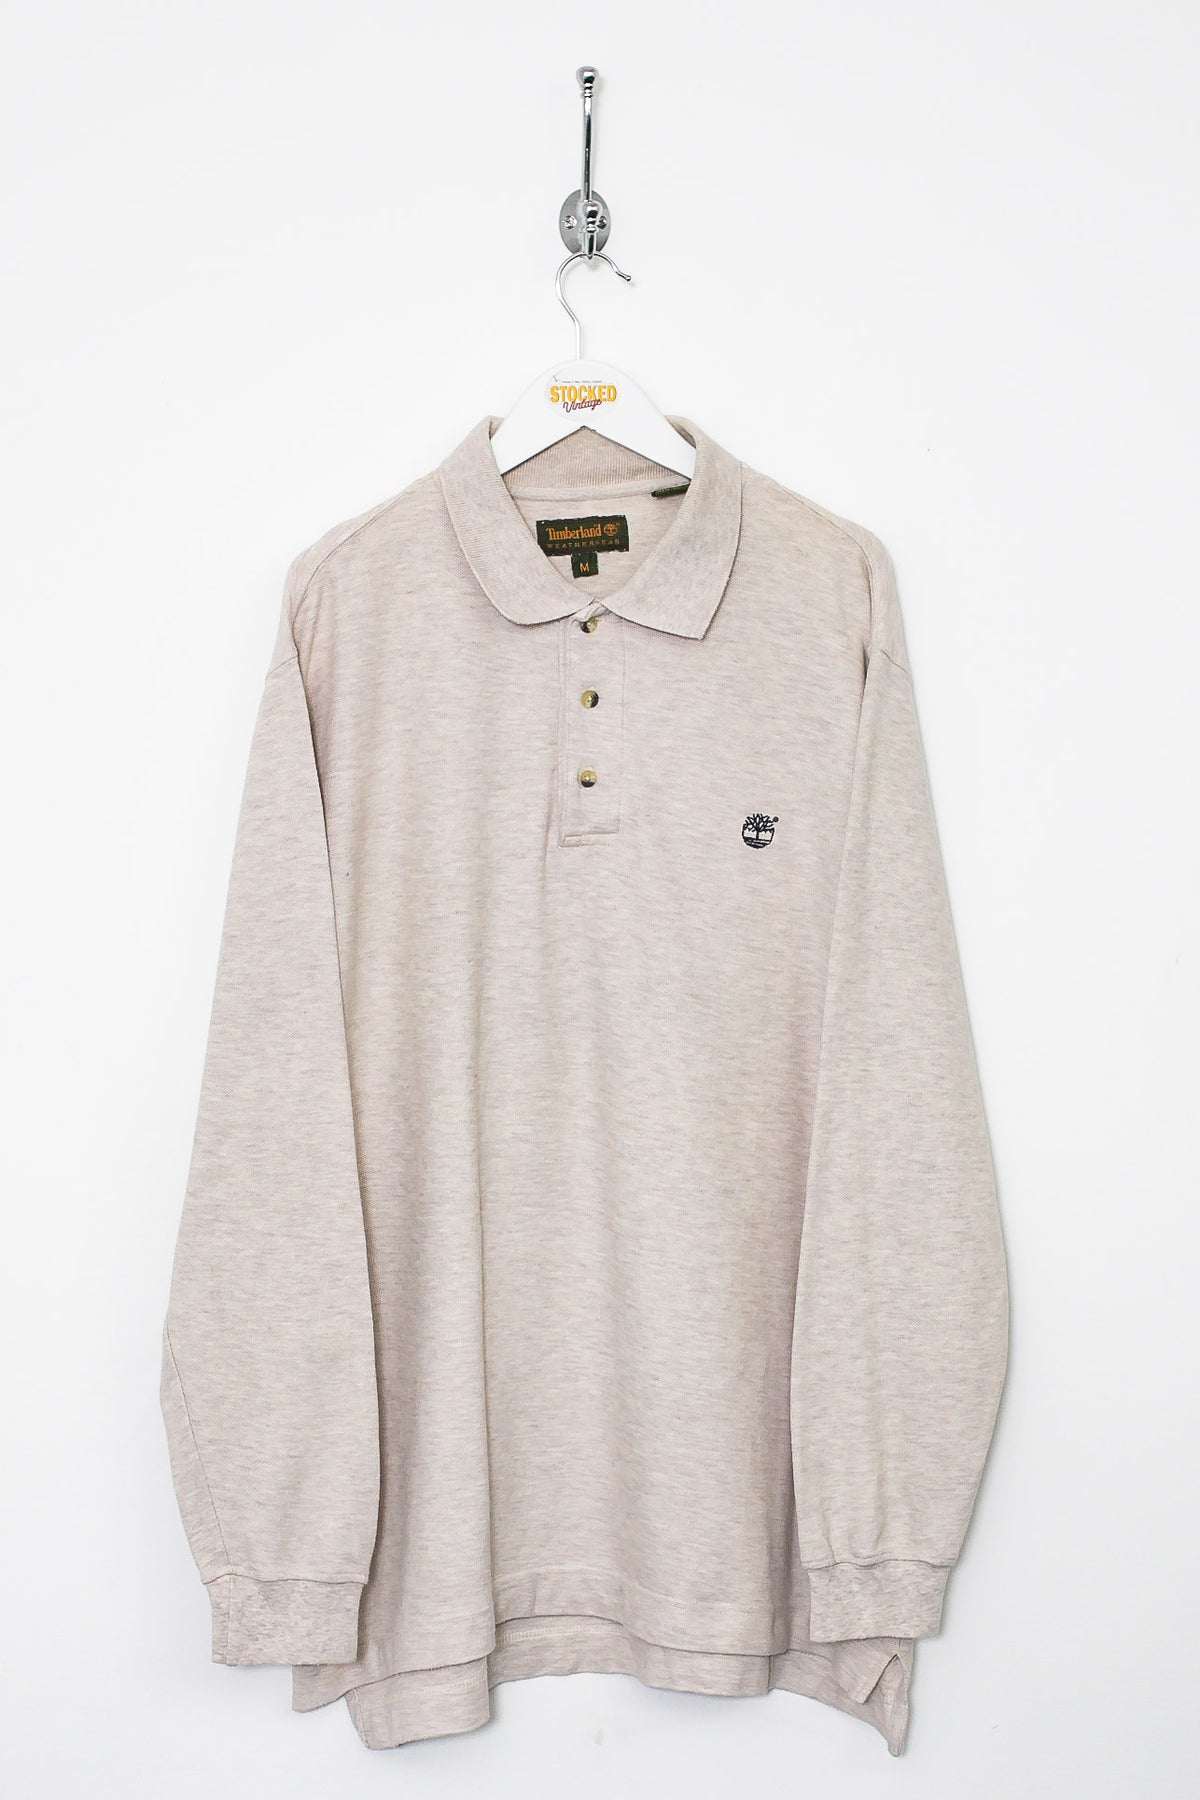 00s Timberland Long Sleeve Polo Shirt (M)